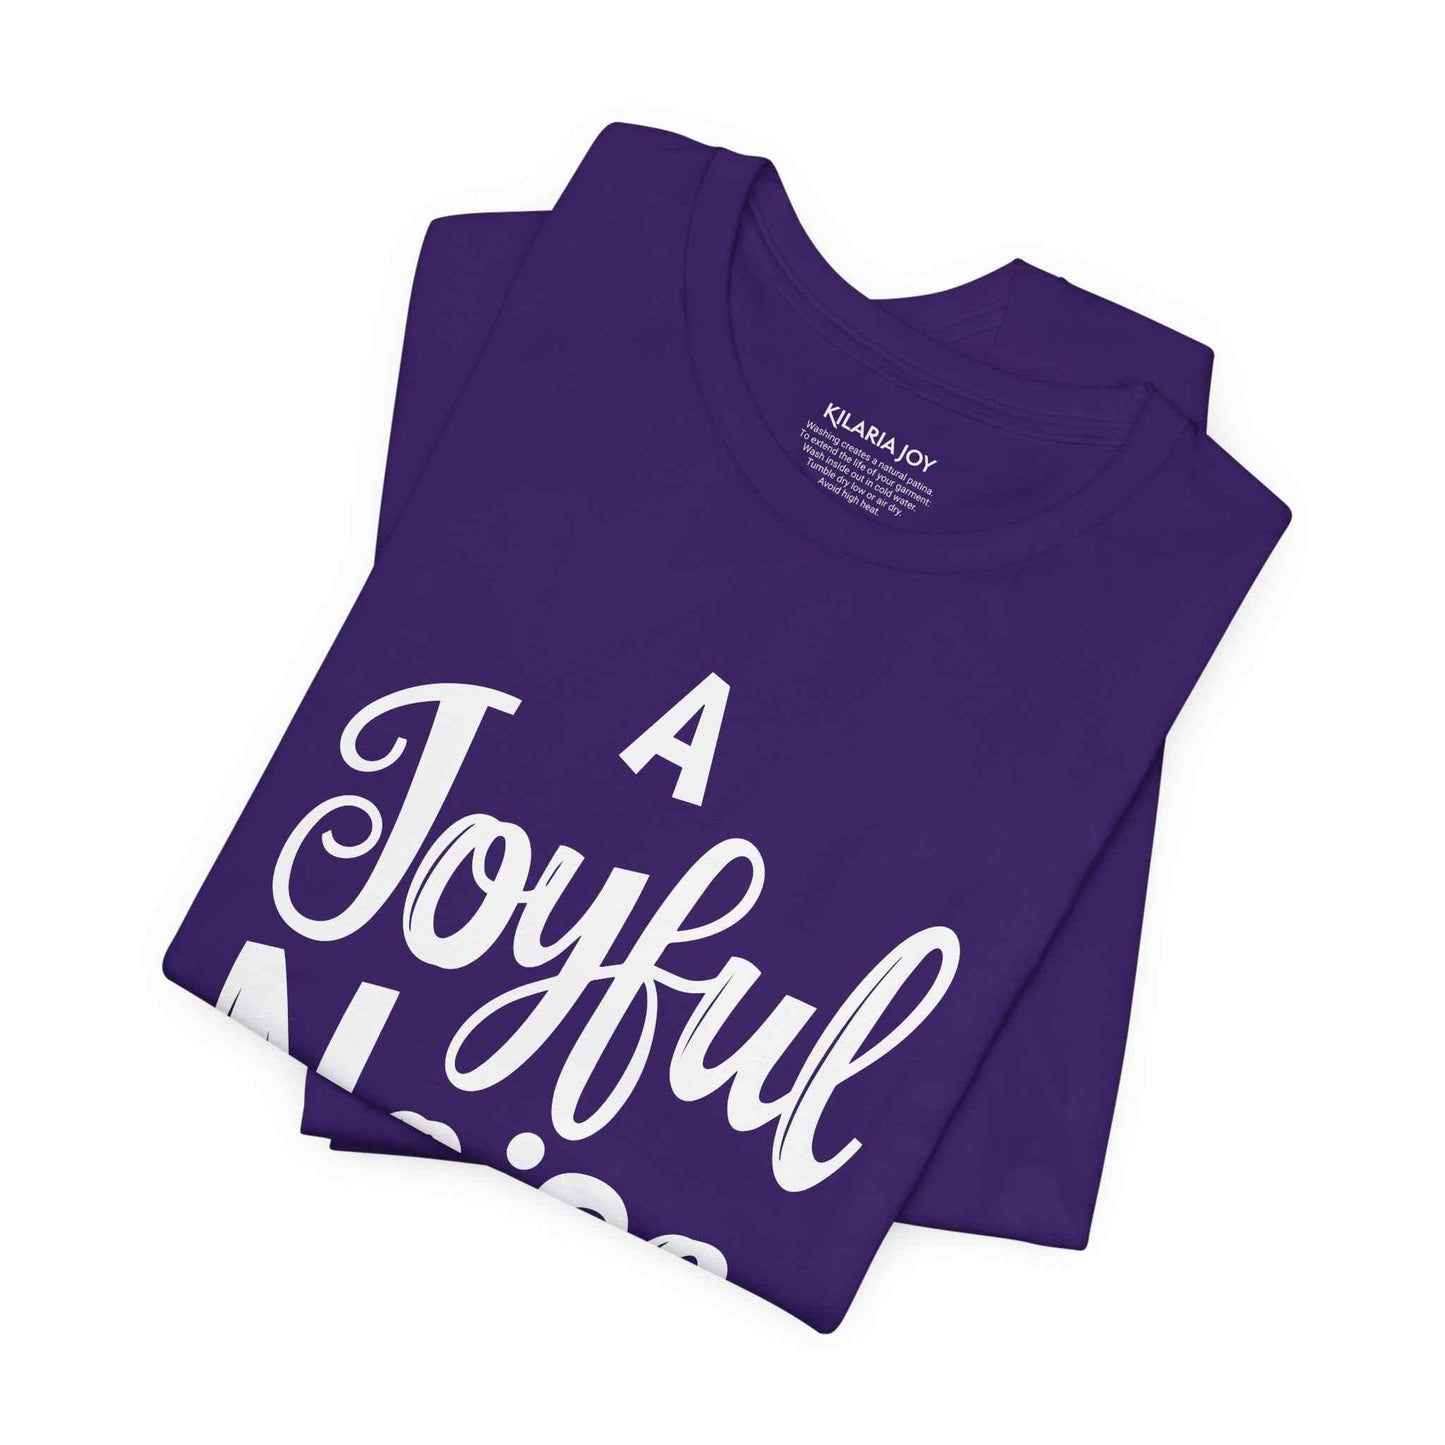 Joyful Noise Women's Classic Modern Fit T-Shirt